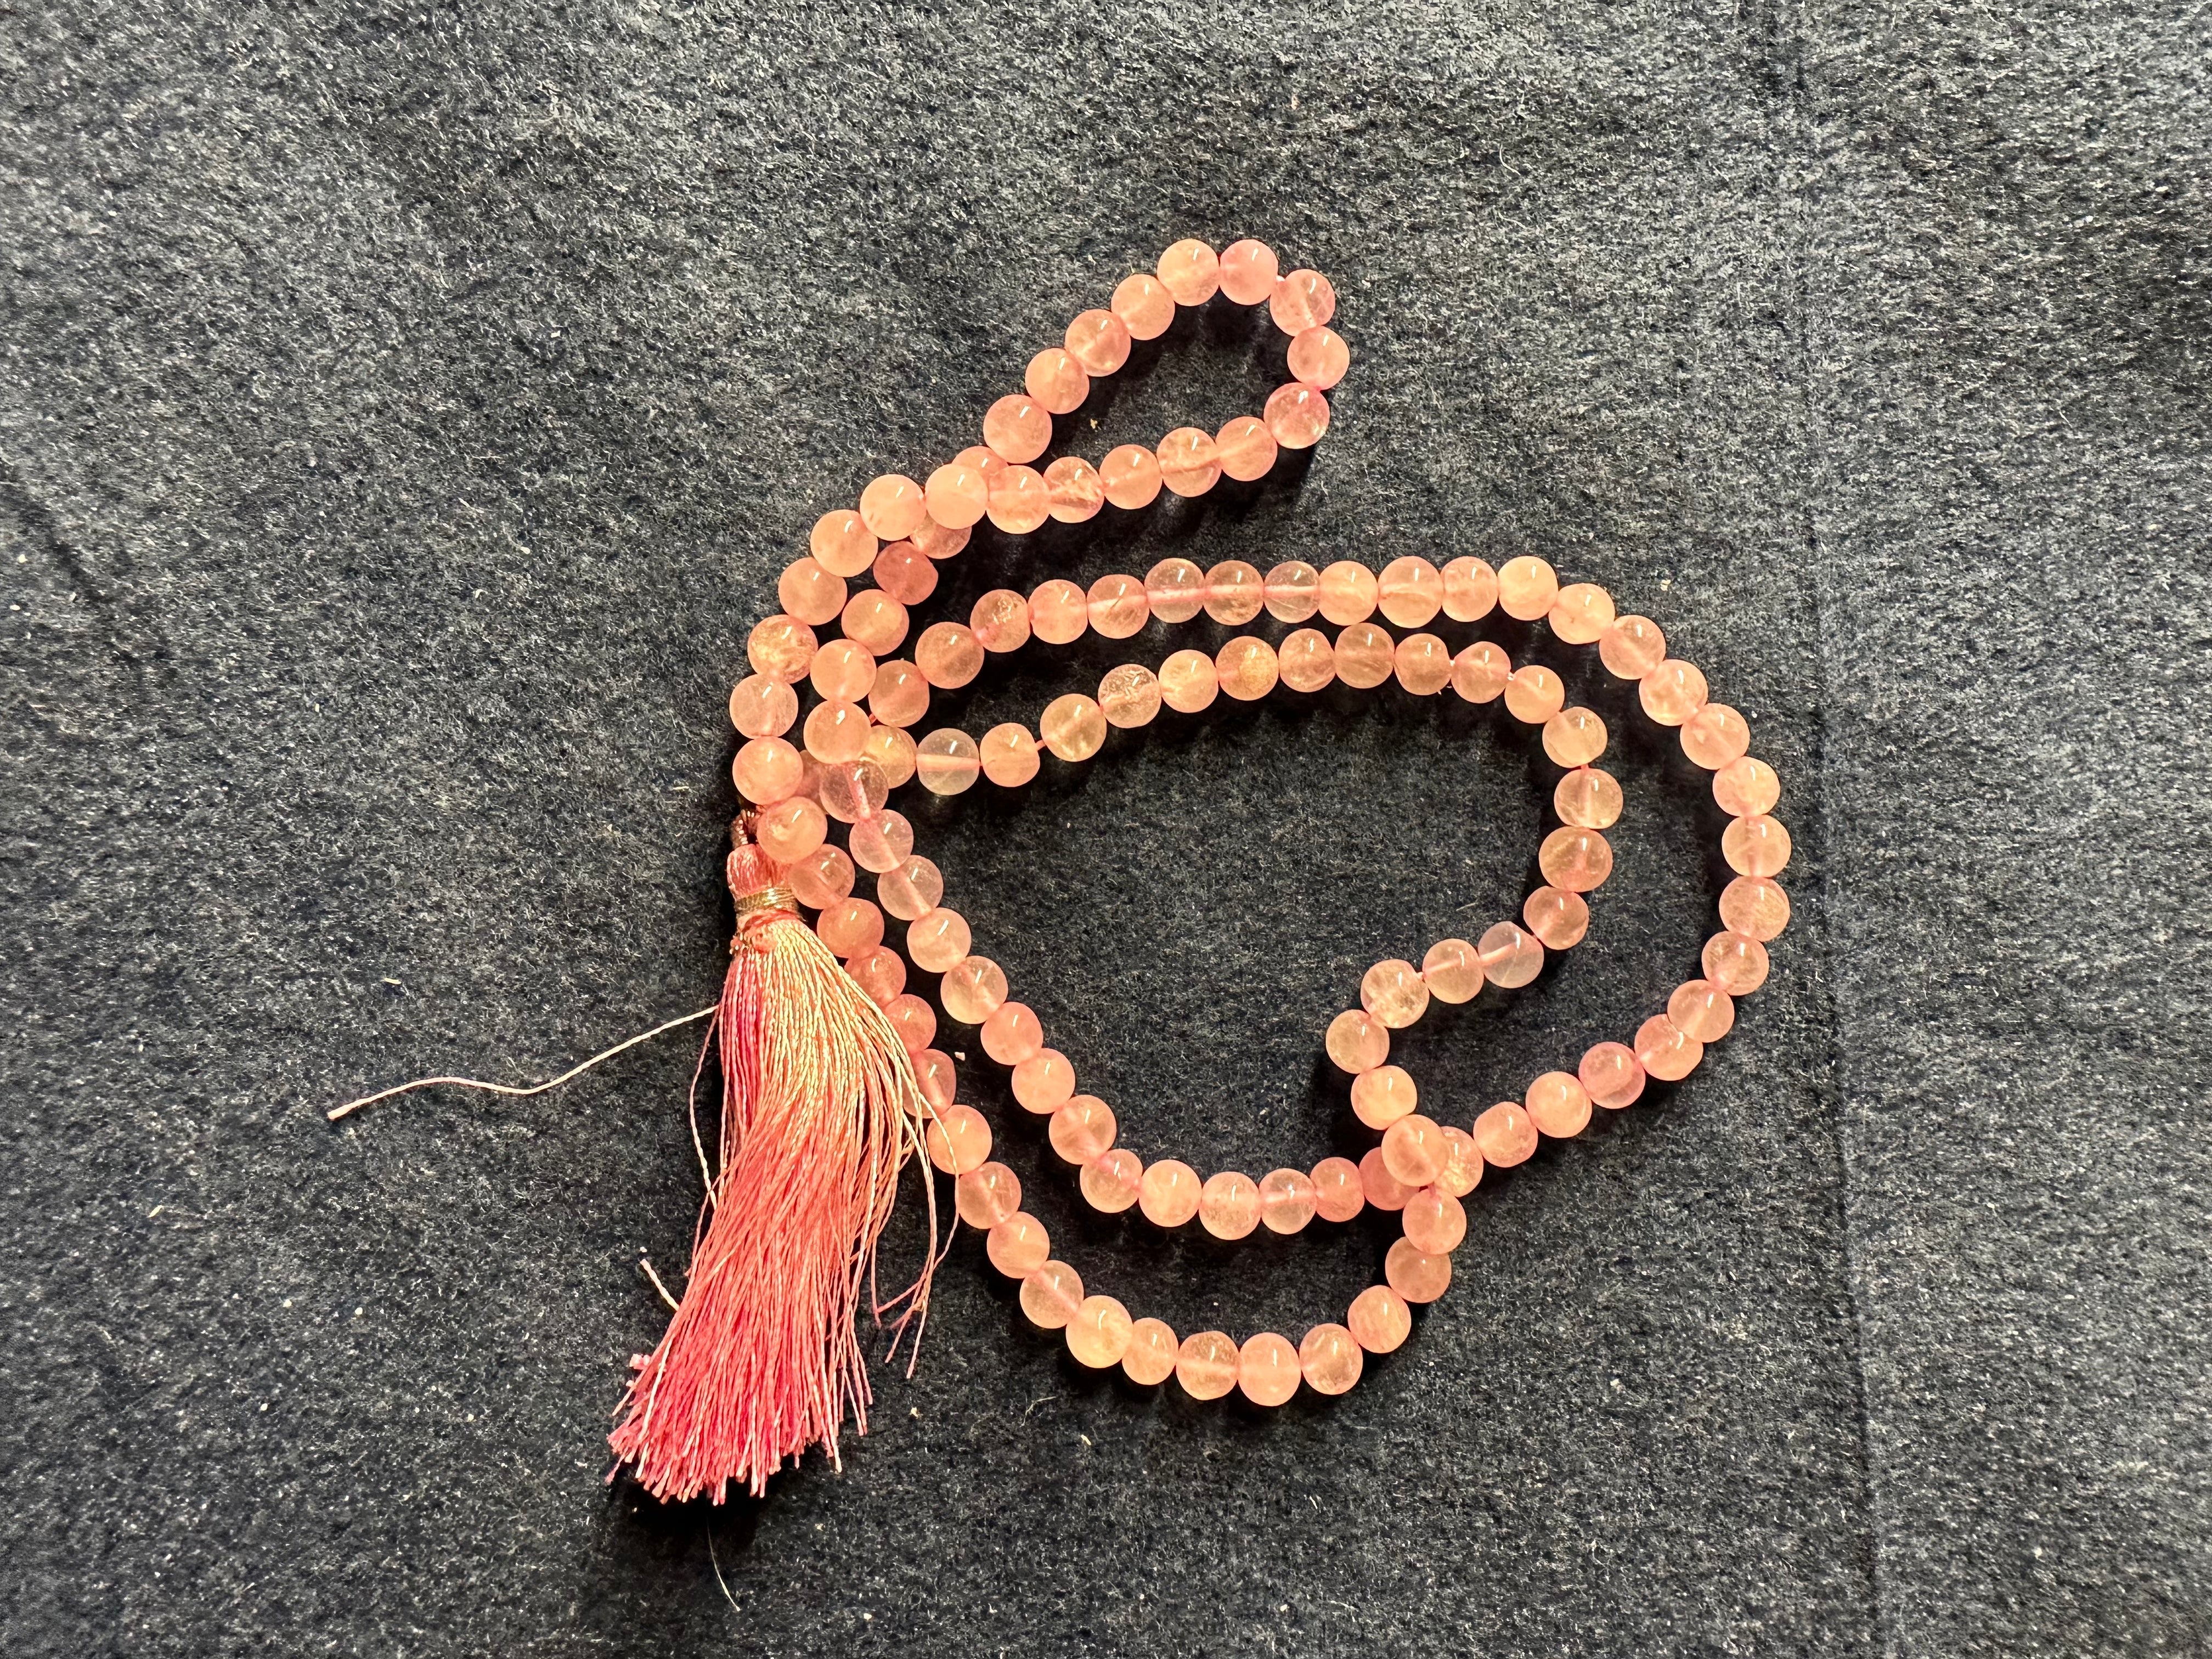 Rosewood Mala (108 Beads on Thread) - The Amma Store